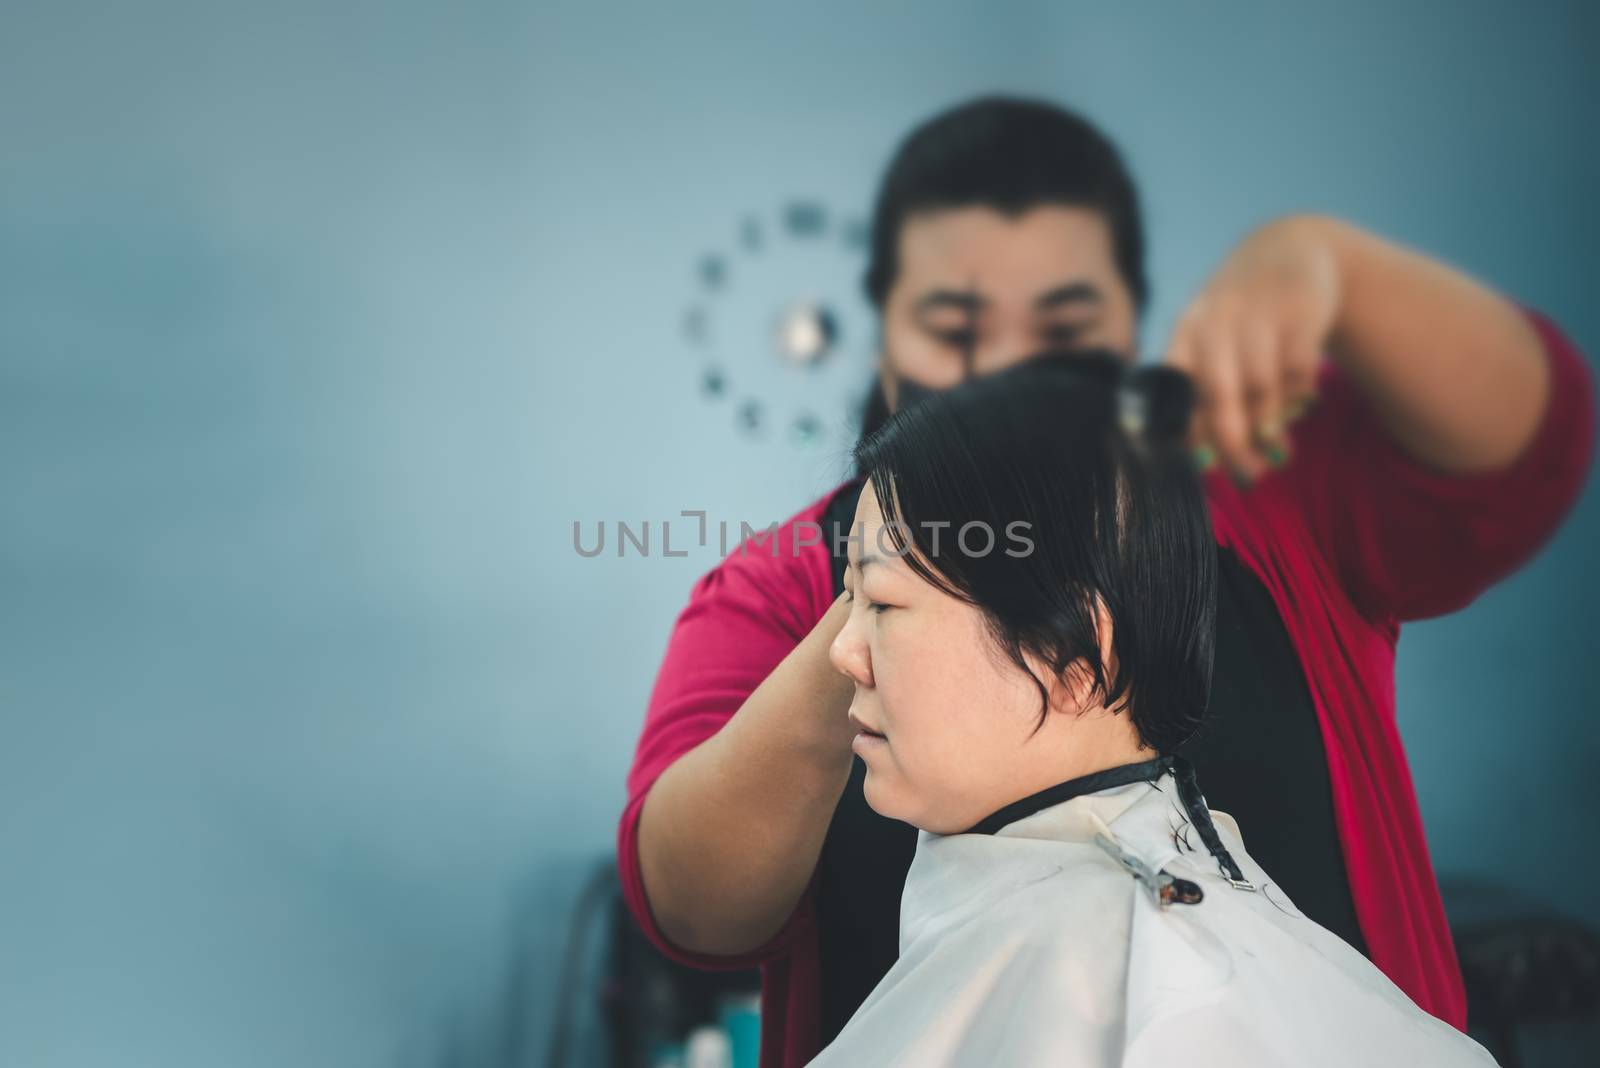 Hairstyle or barber haircut customer at barbershop by PongMoji